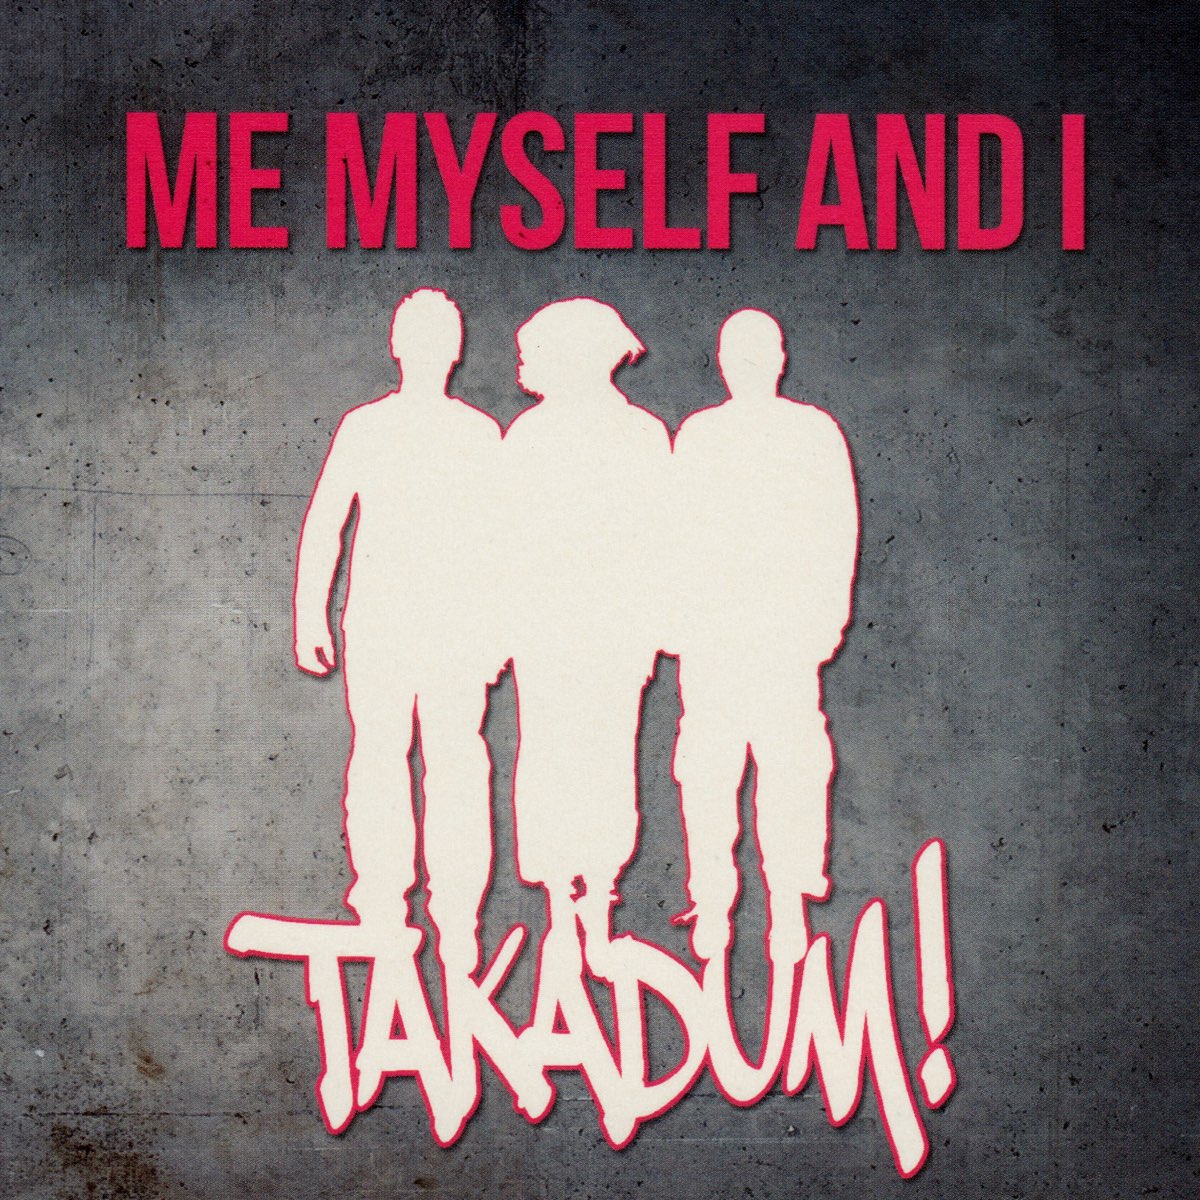 Me myself and die. I myself. Me myself and i. Takadum. Takadum mp3.